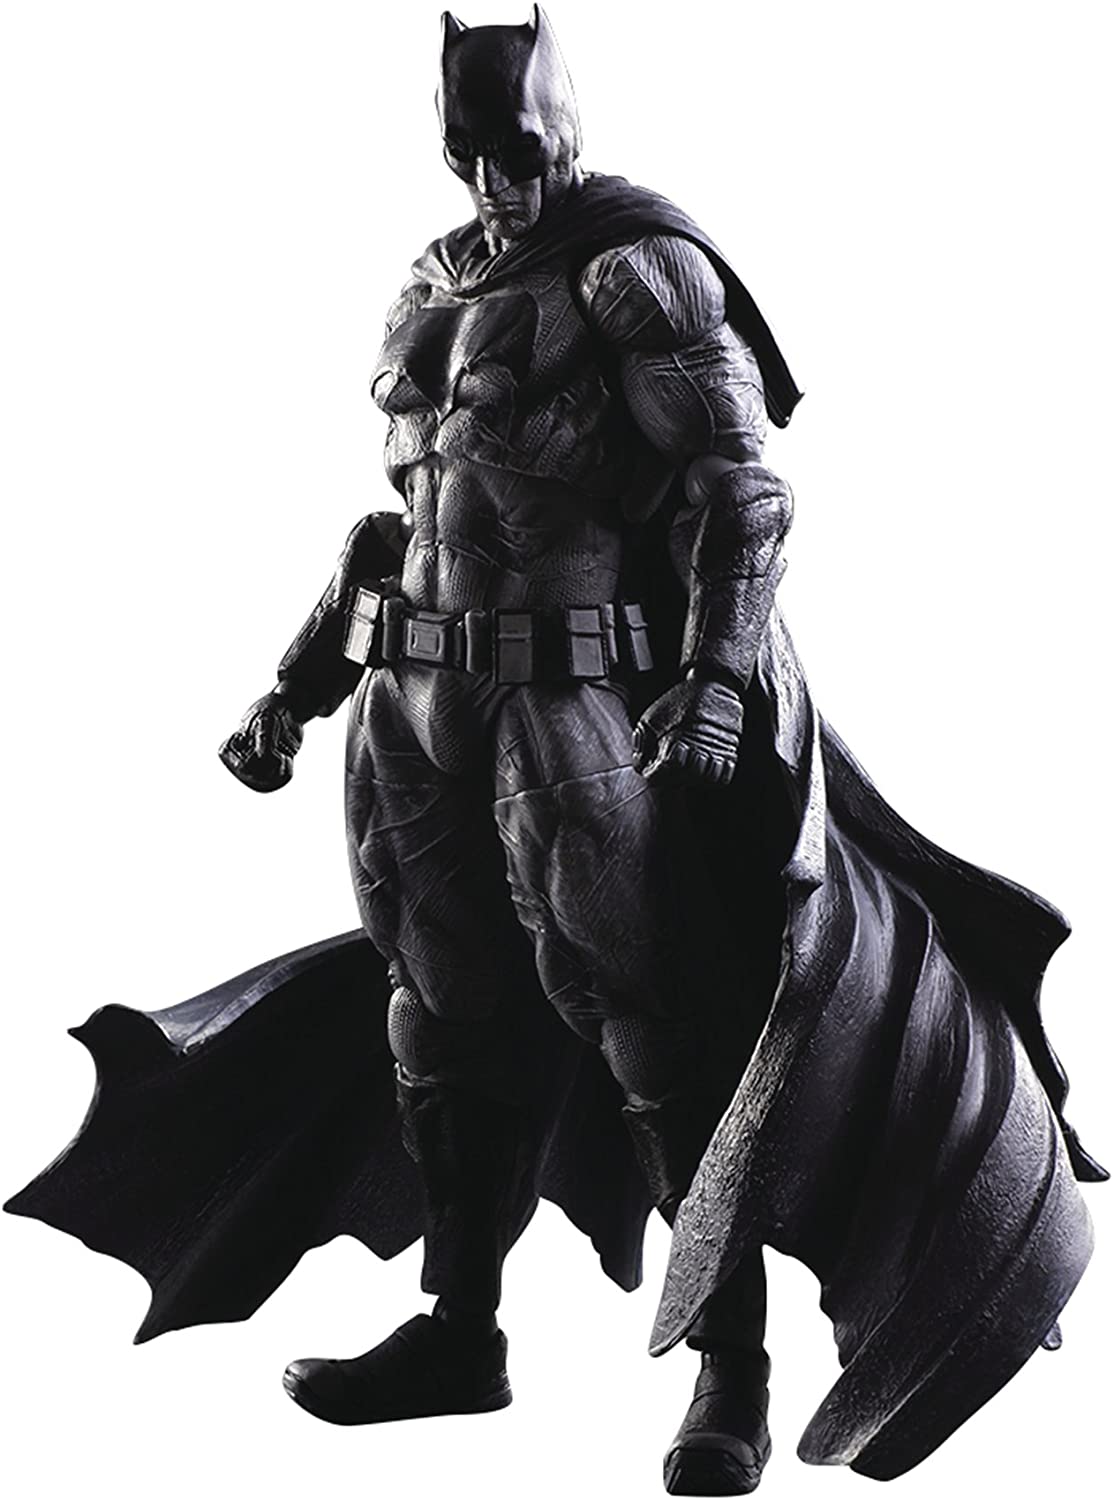 DC Universe Batman V Superman Dawn of Justice Batman Black and White Ver. Variant Play Arts Kai Action Figure